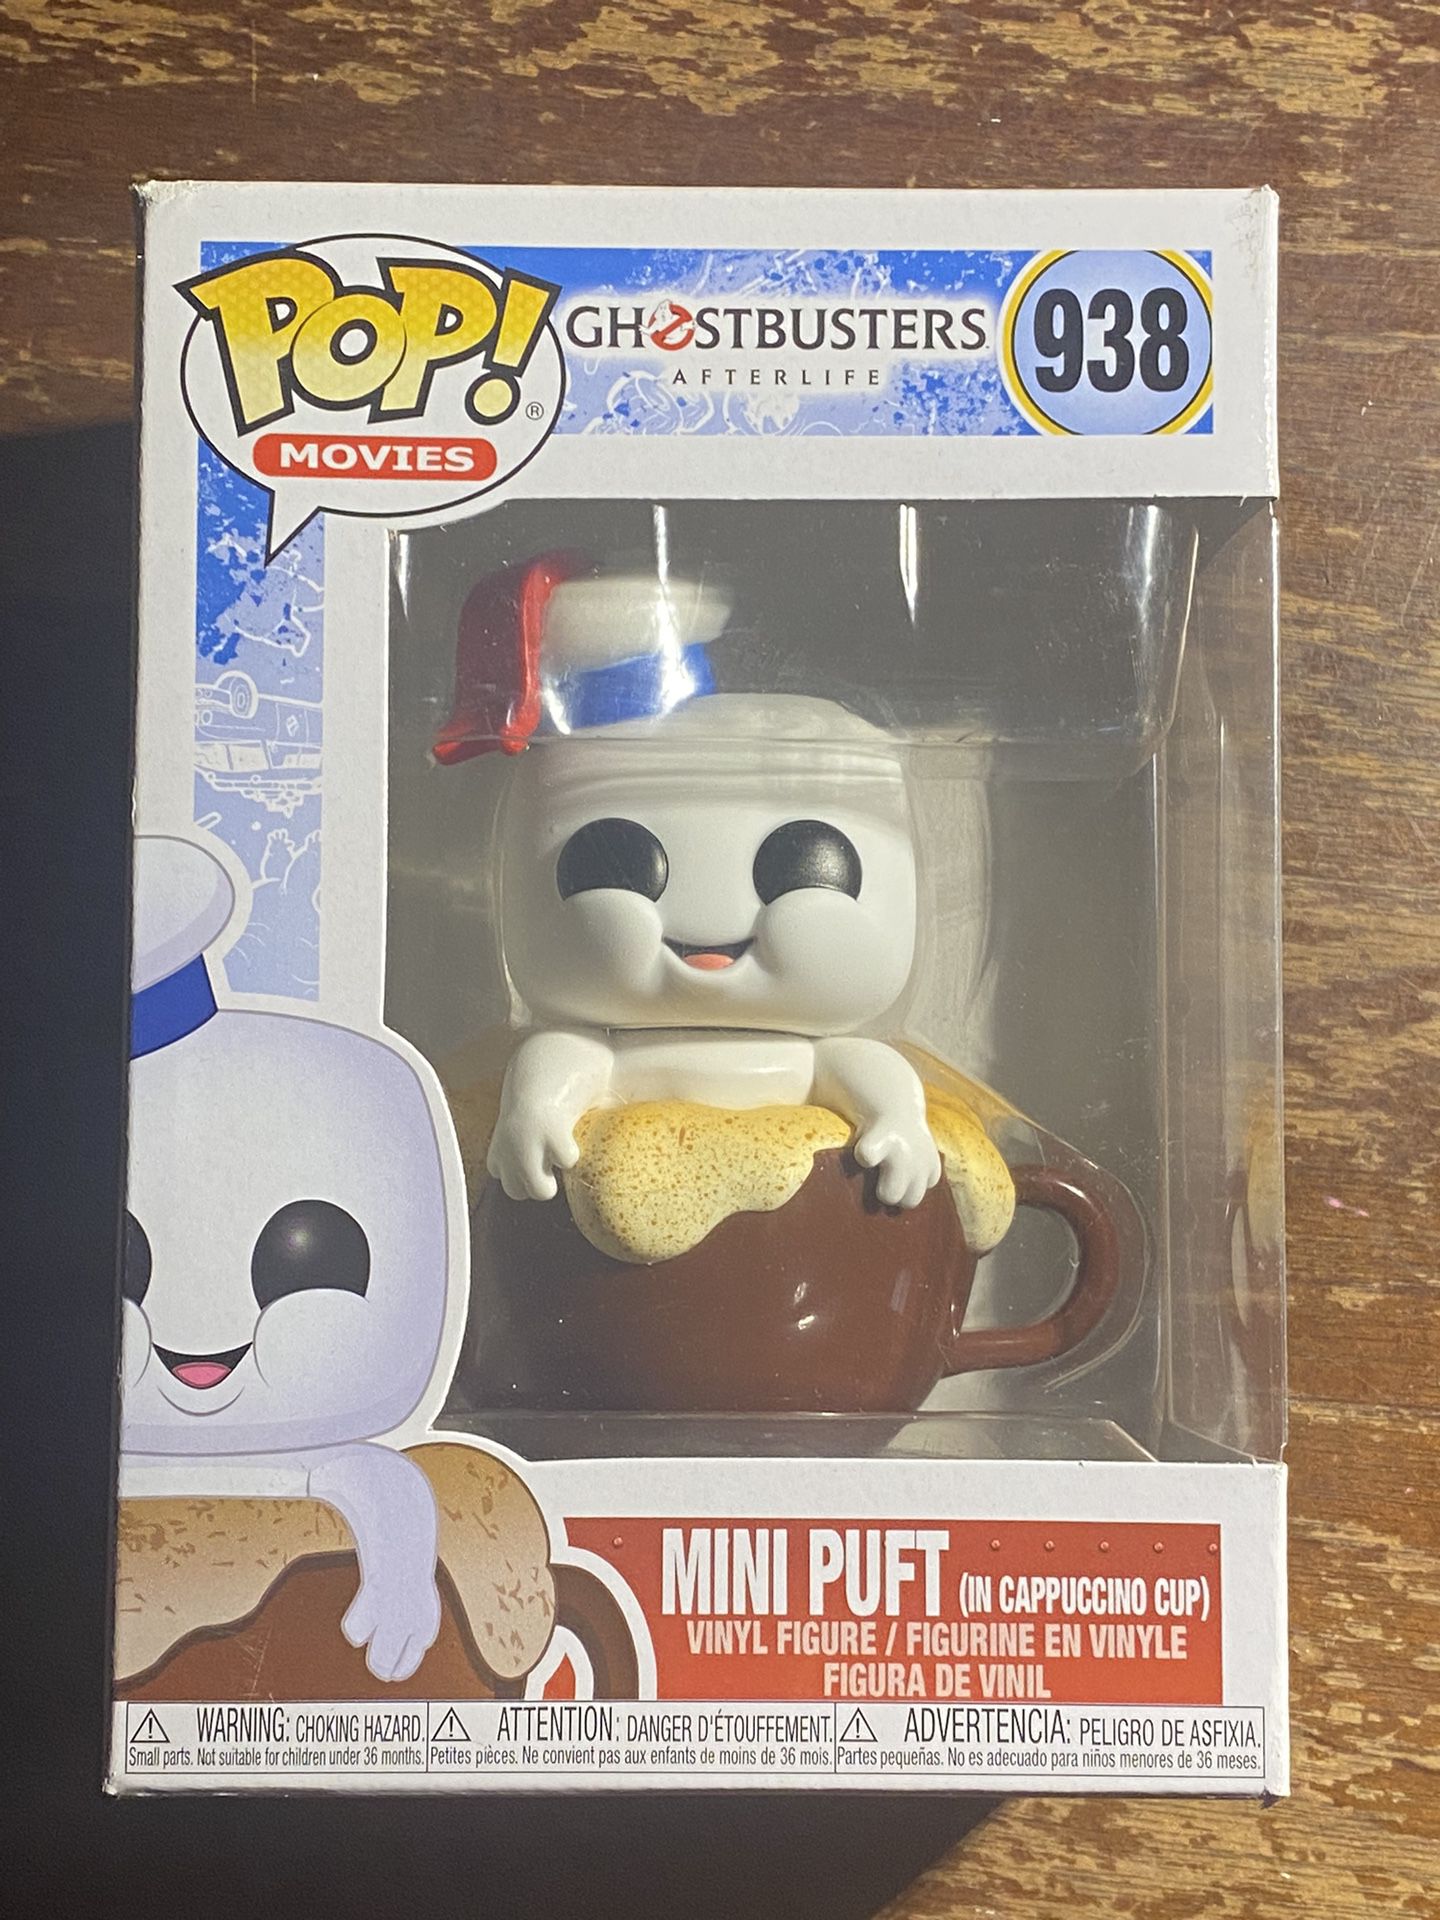  Mini Puft (in Cappuccino Cup)